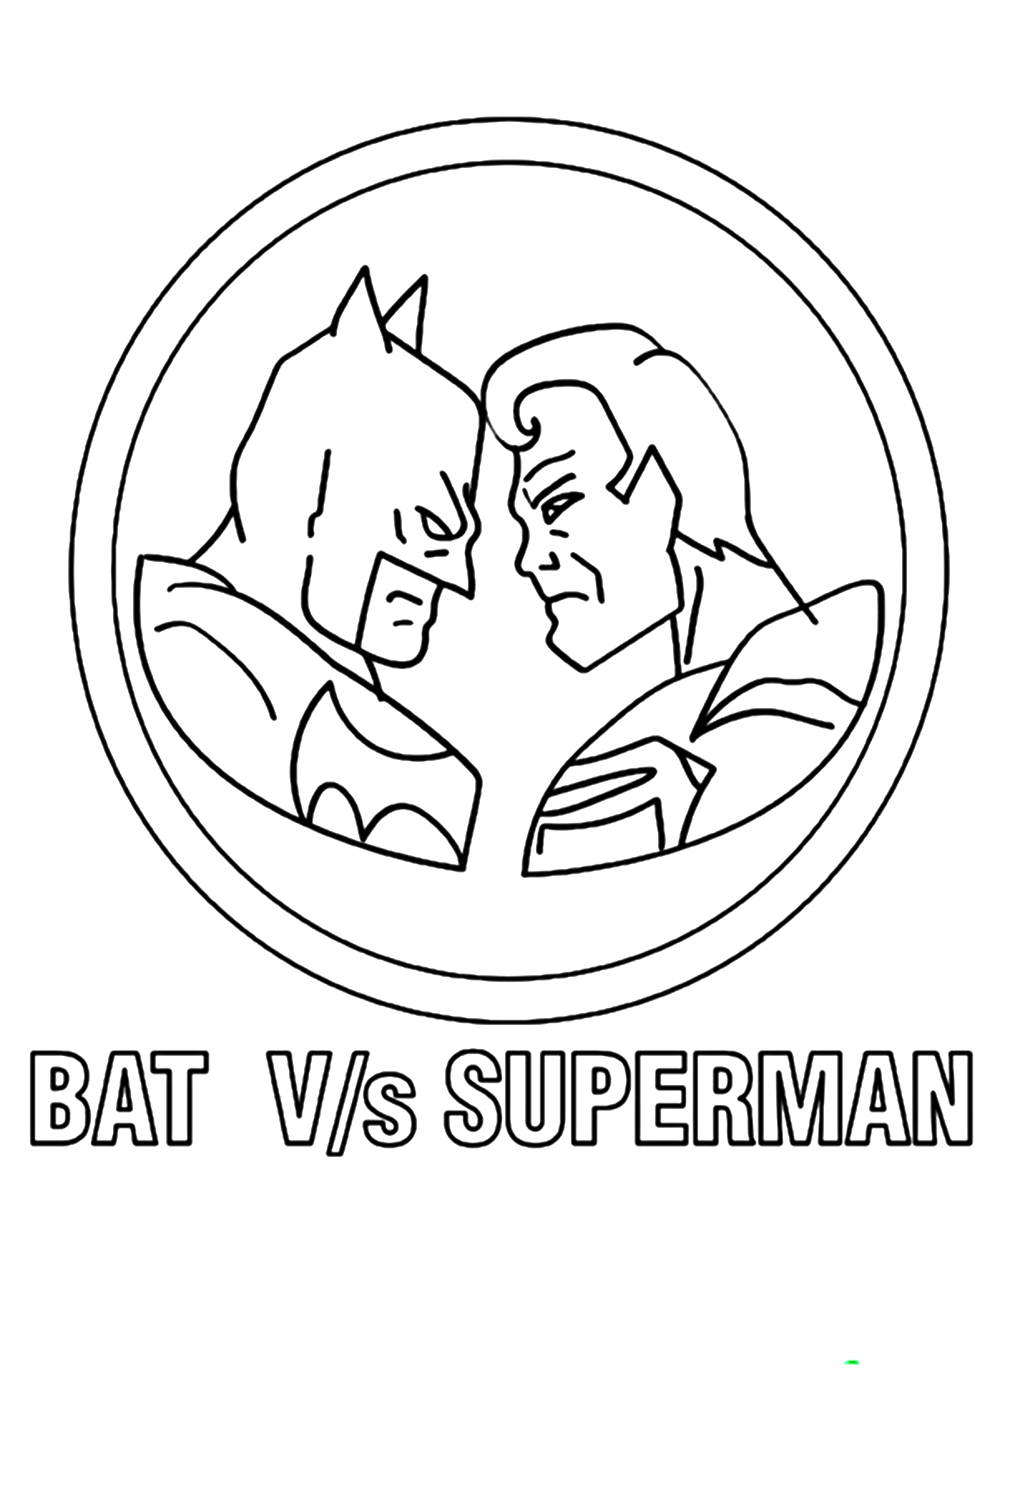 Batman versus Superman van Batman